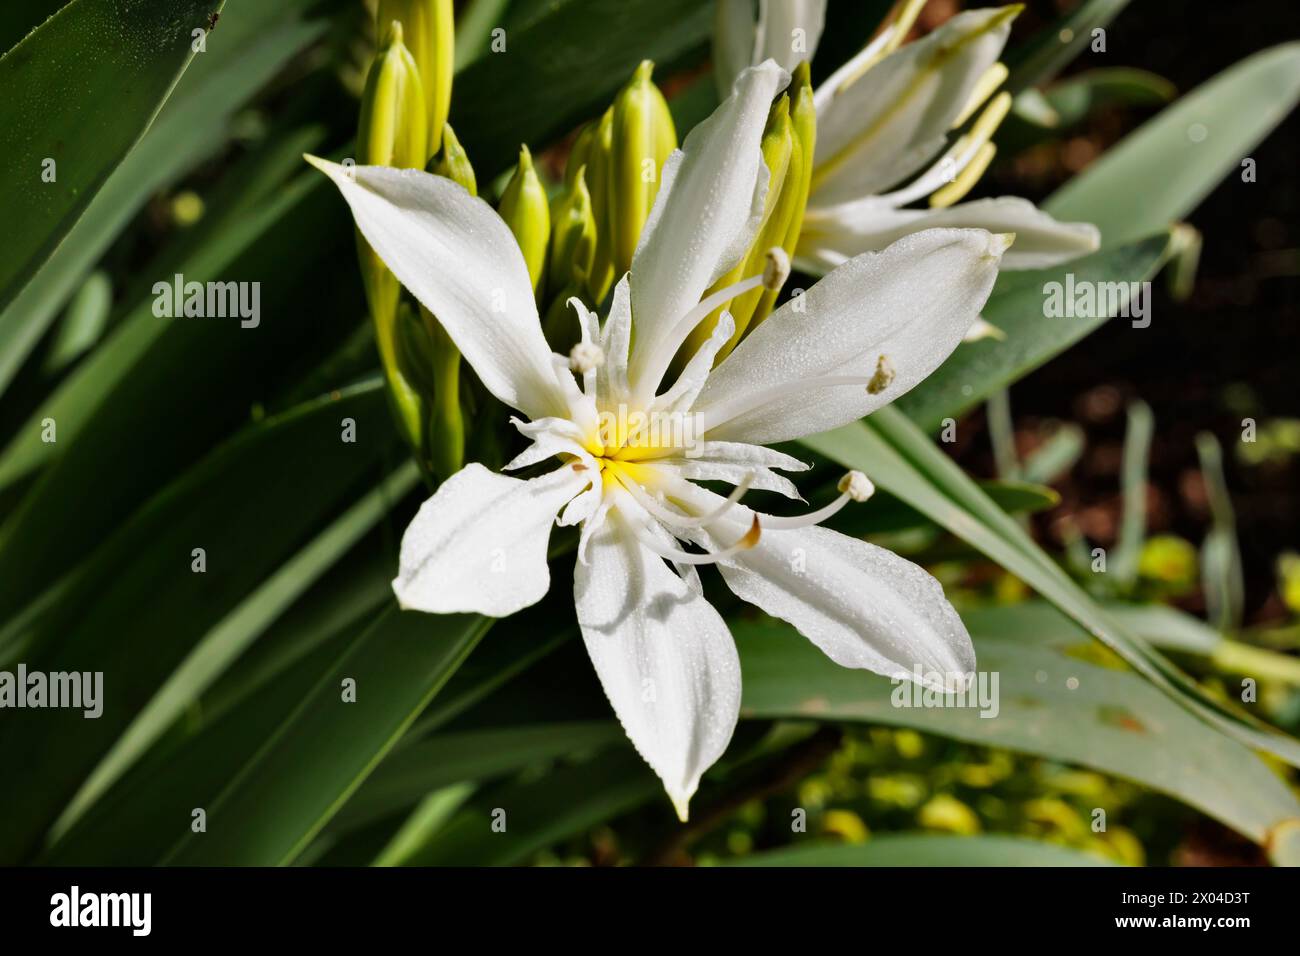 White flower of pancratium  perennial ,bulbous plant in the Amaryllis family Stock Photo